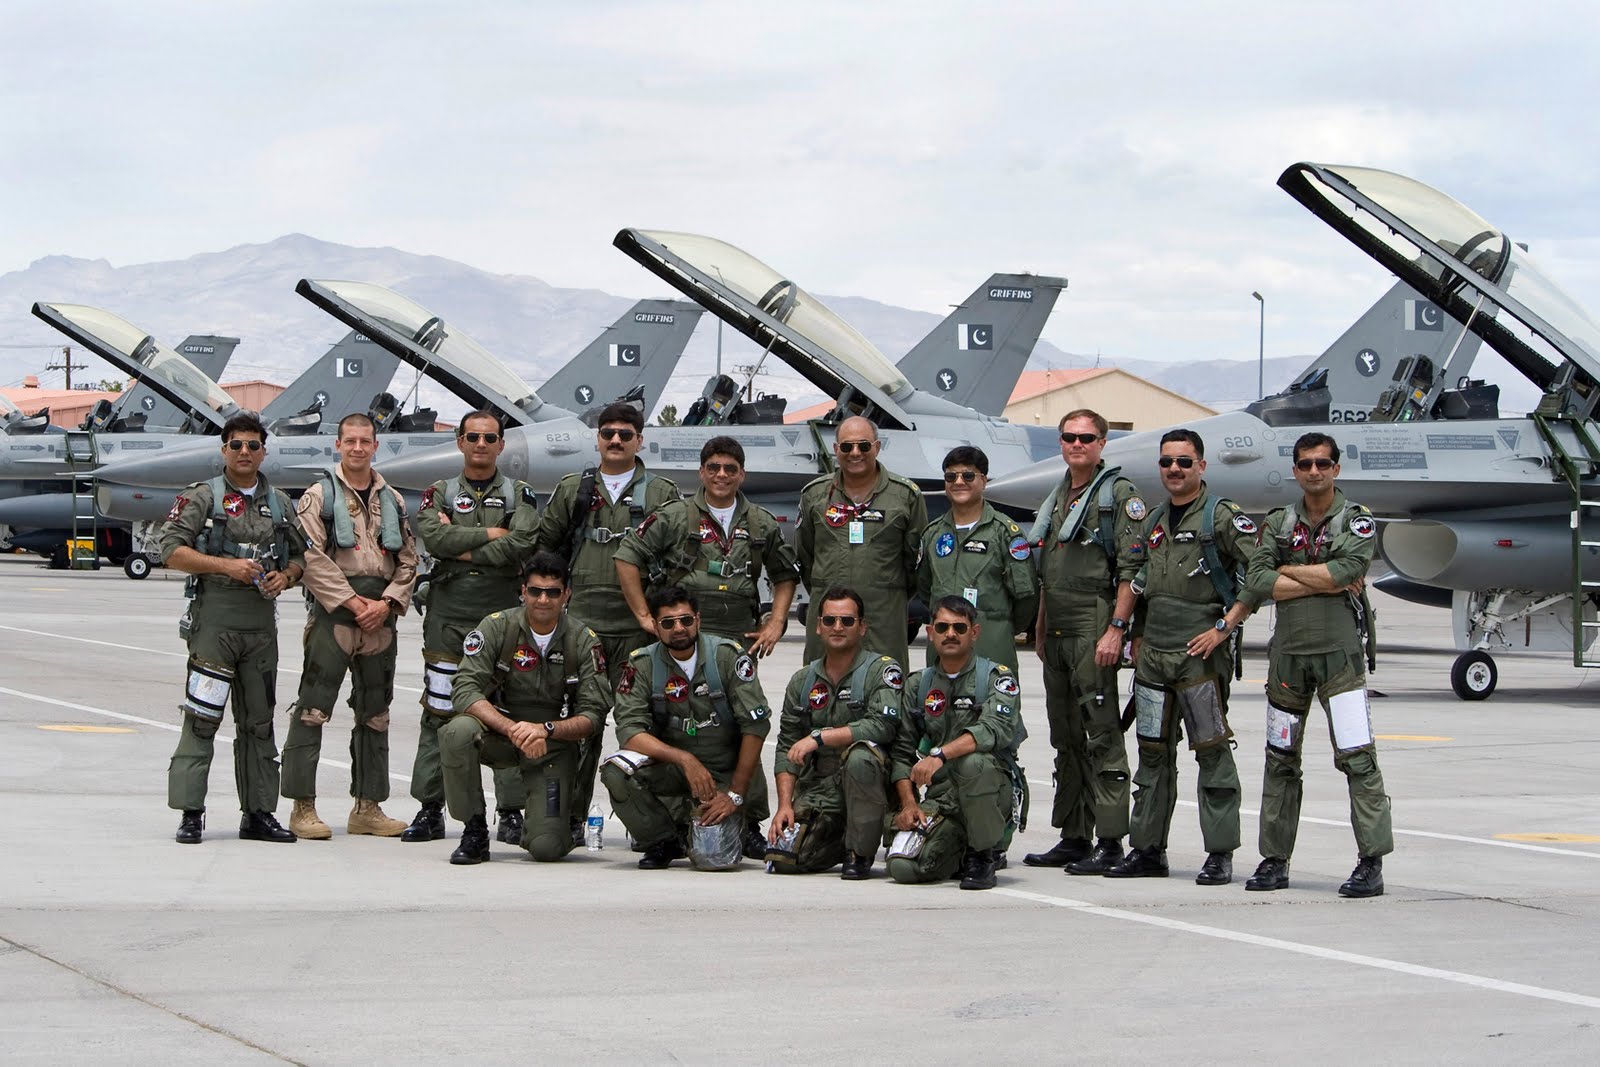 http://4.bp.blogspot.com/-QMRJ3dE7fBQ/UPLpyMBXAHI/AAAAAAAAEcw/LXs4fOzPJlk/s1600/Pakistan+Air+Force+New+Wallpapers+2013+(3).jpg